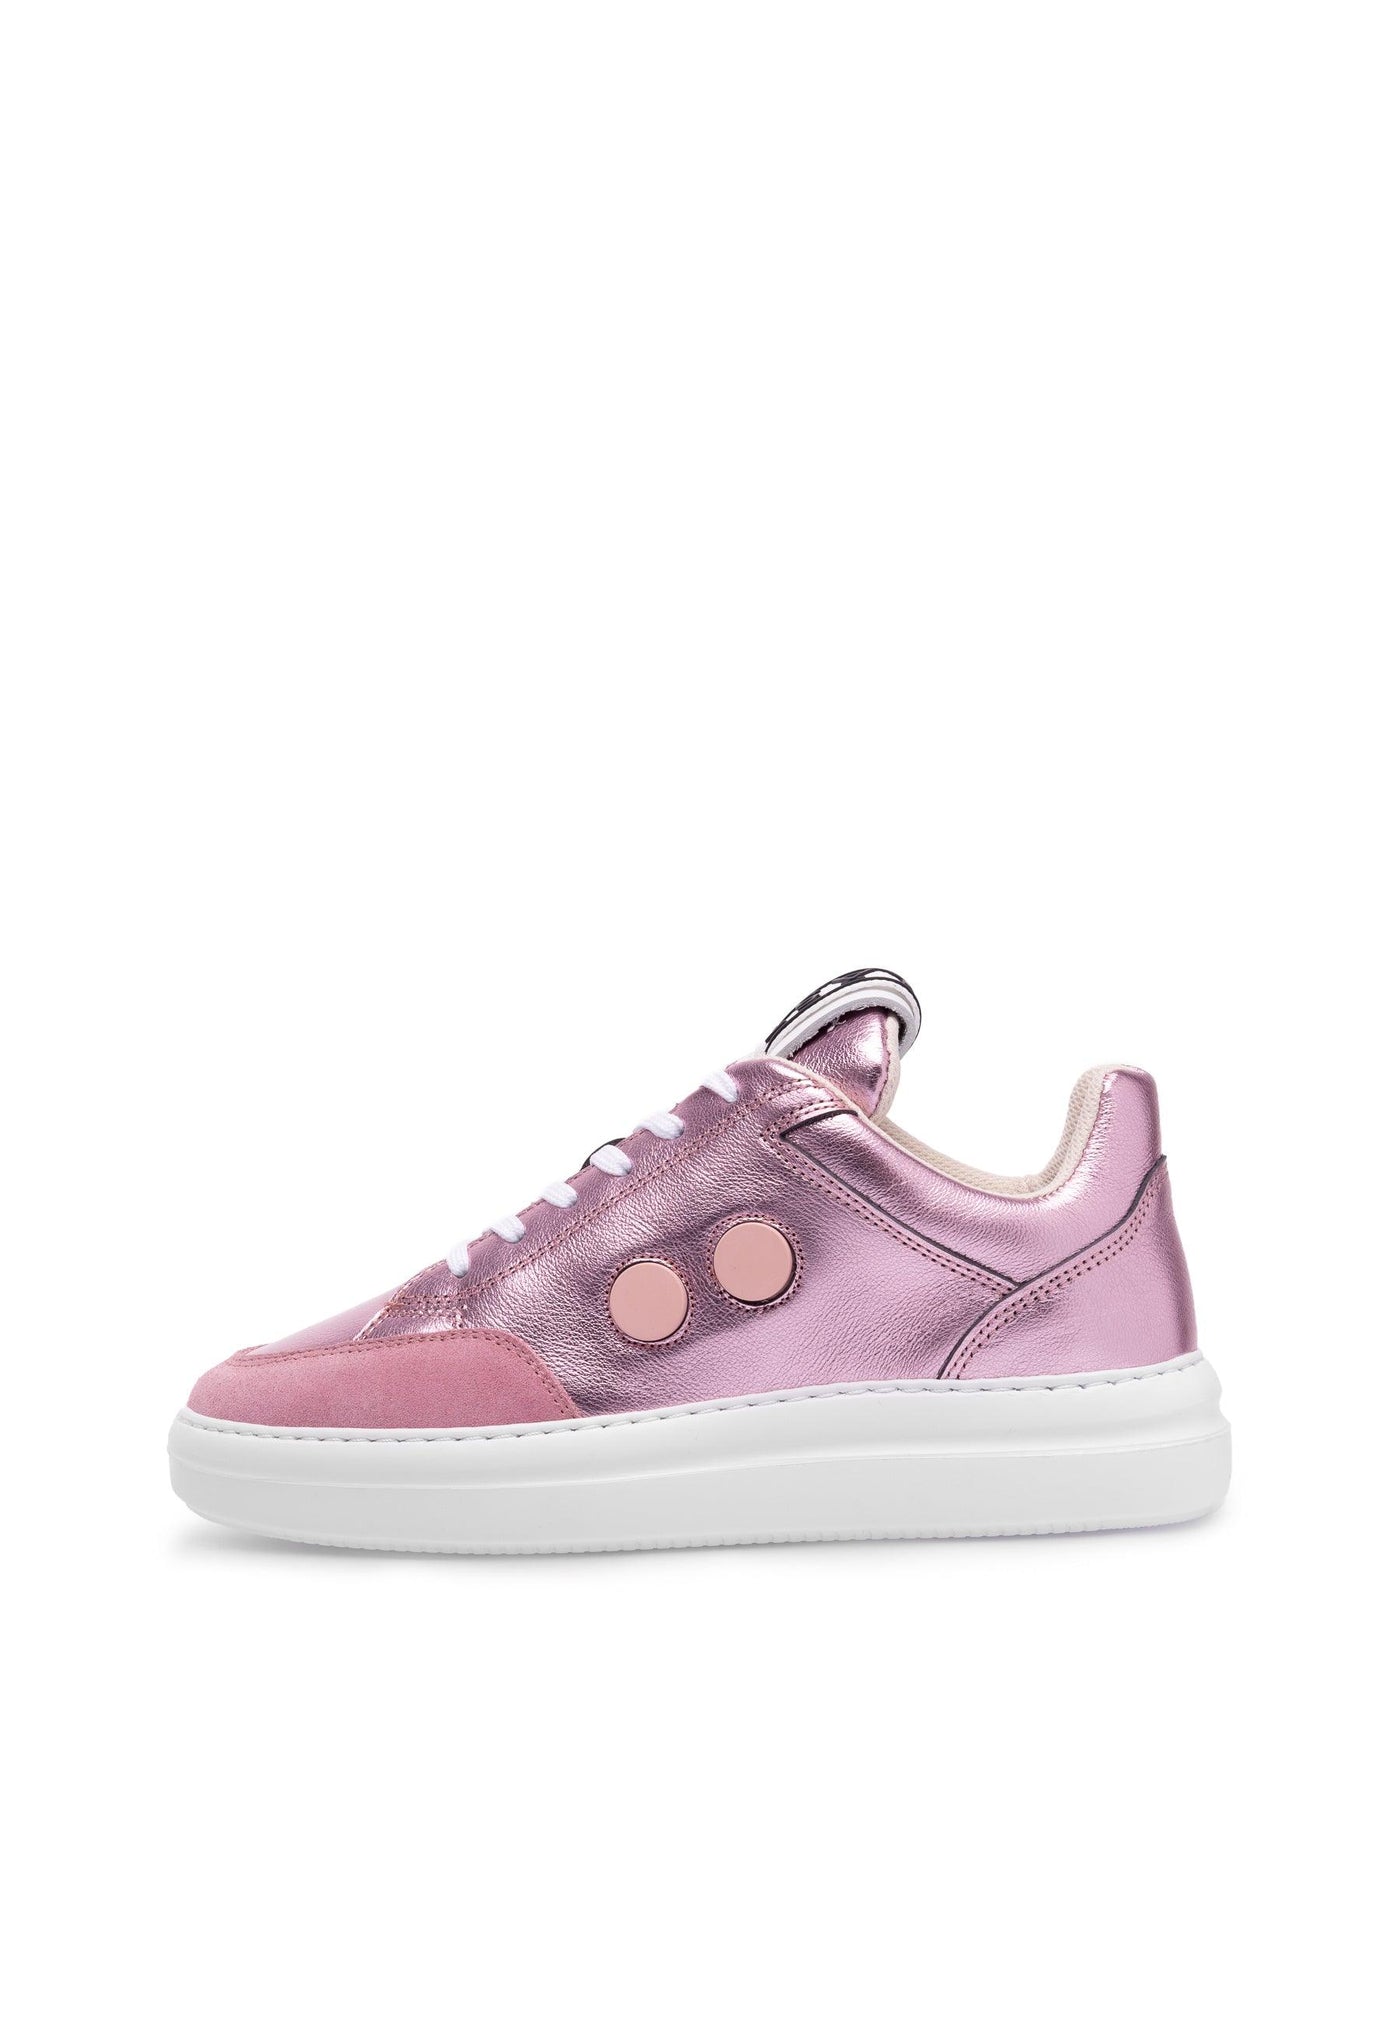 LÄST Minimalist Low - Leather - Pink Metallic Low Sneakers Pink